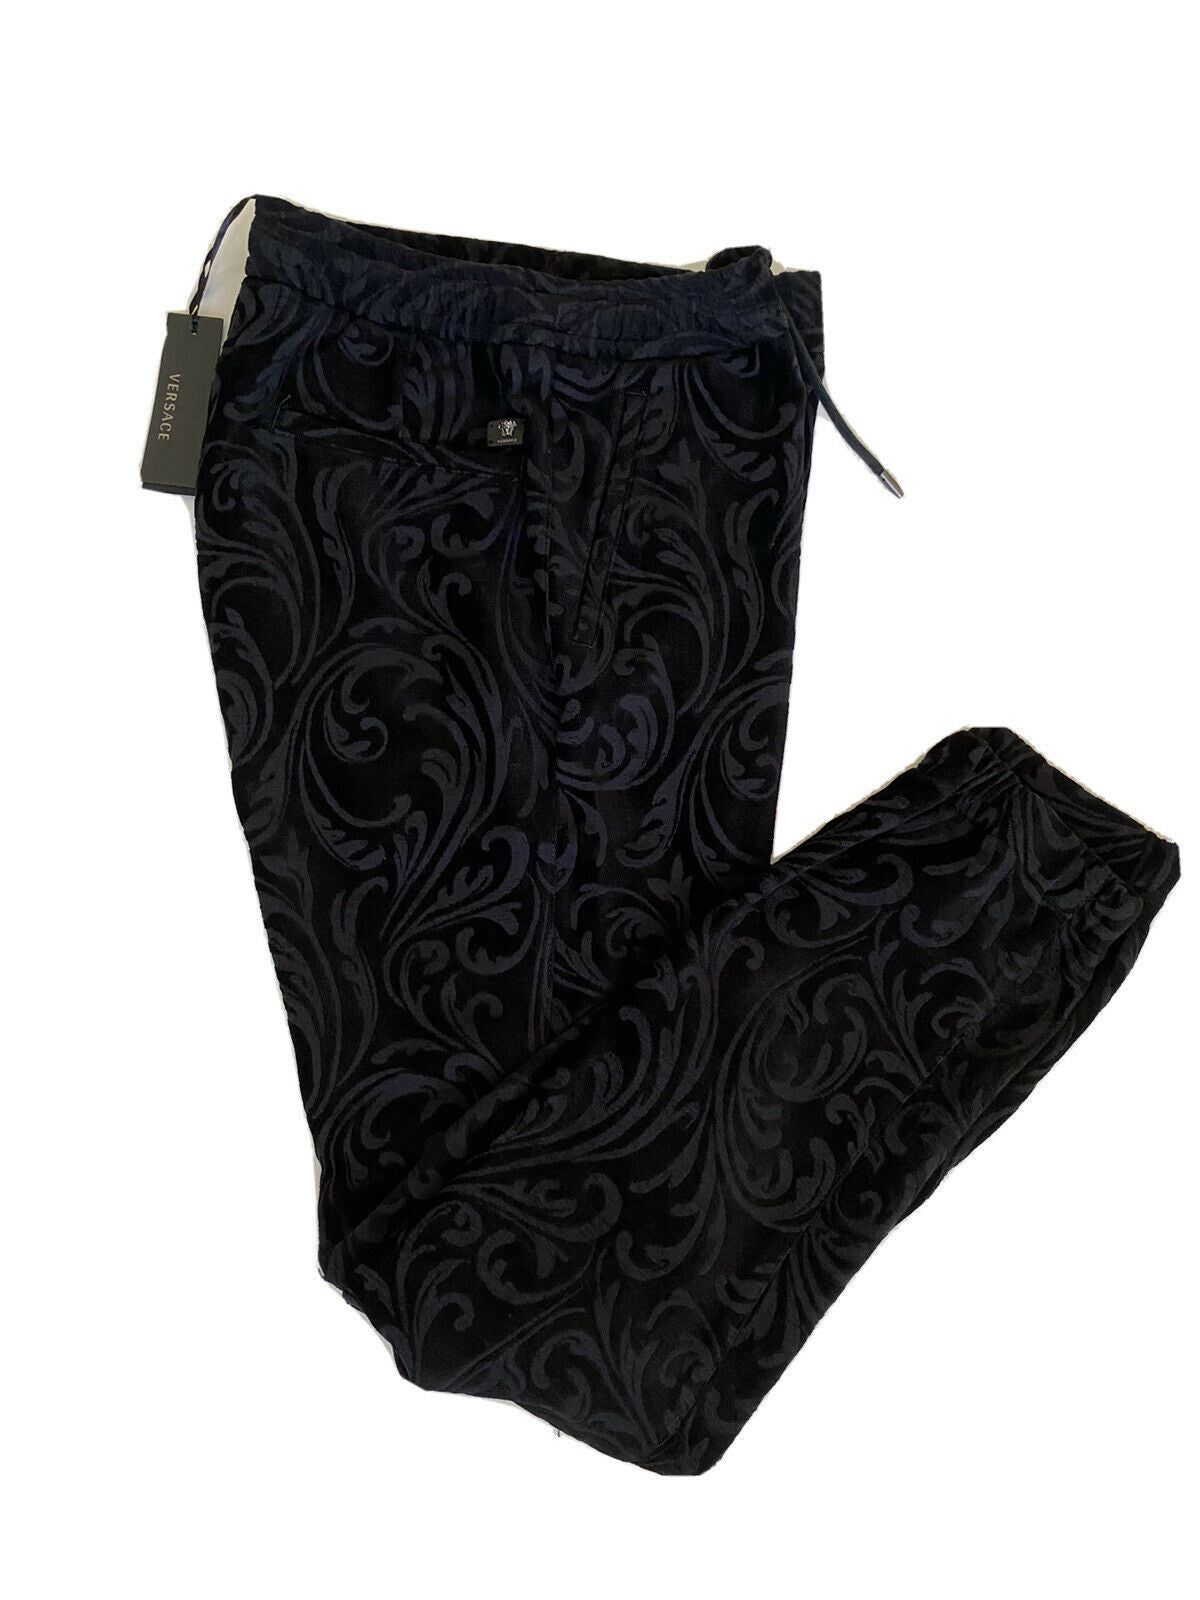 NWT $975 Versace Men's Black Activewear Pants Size Medium 3XL in Italy A79524